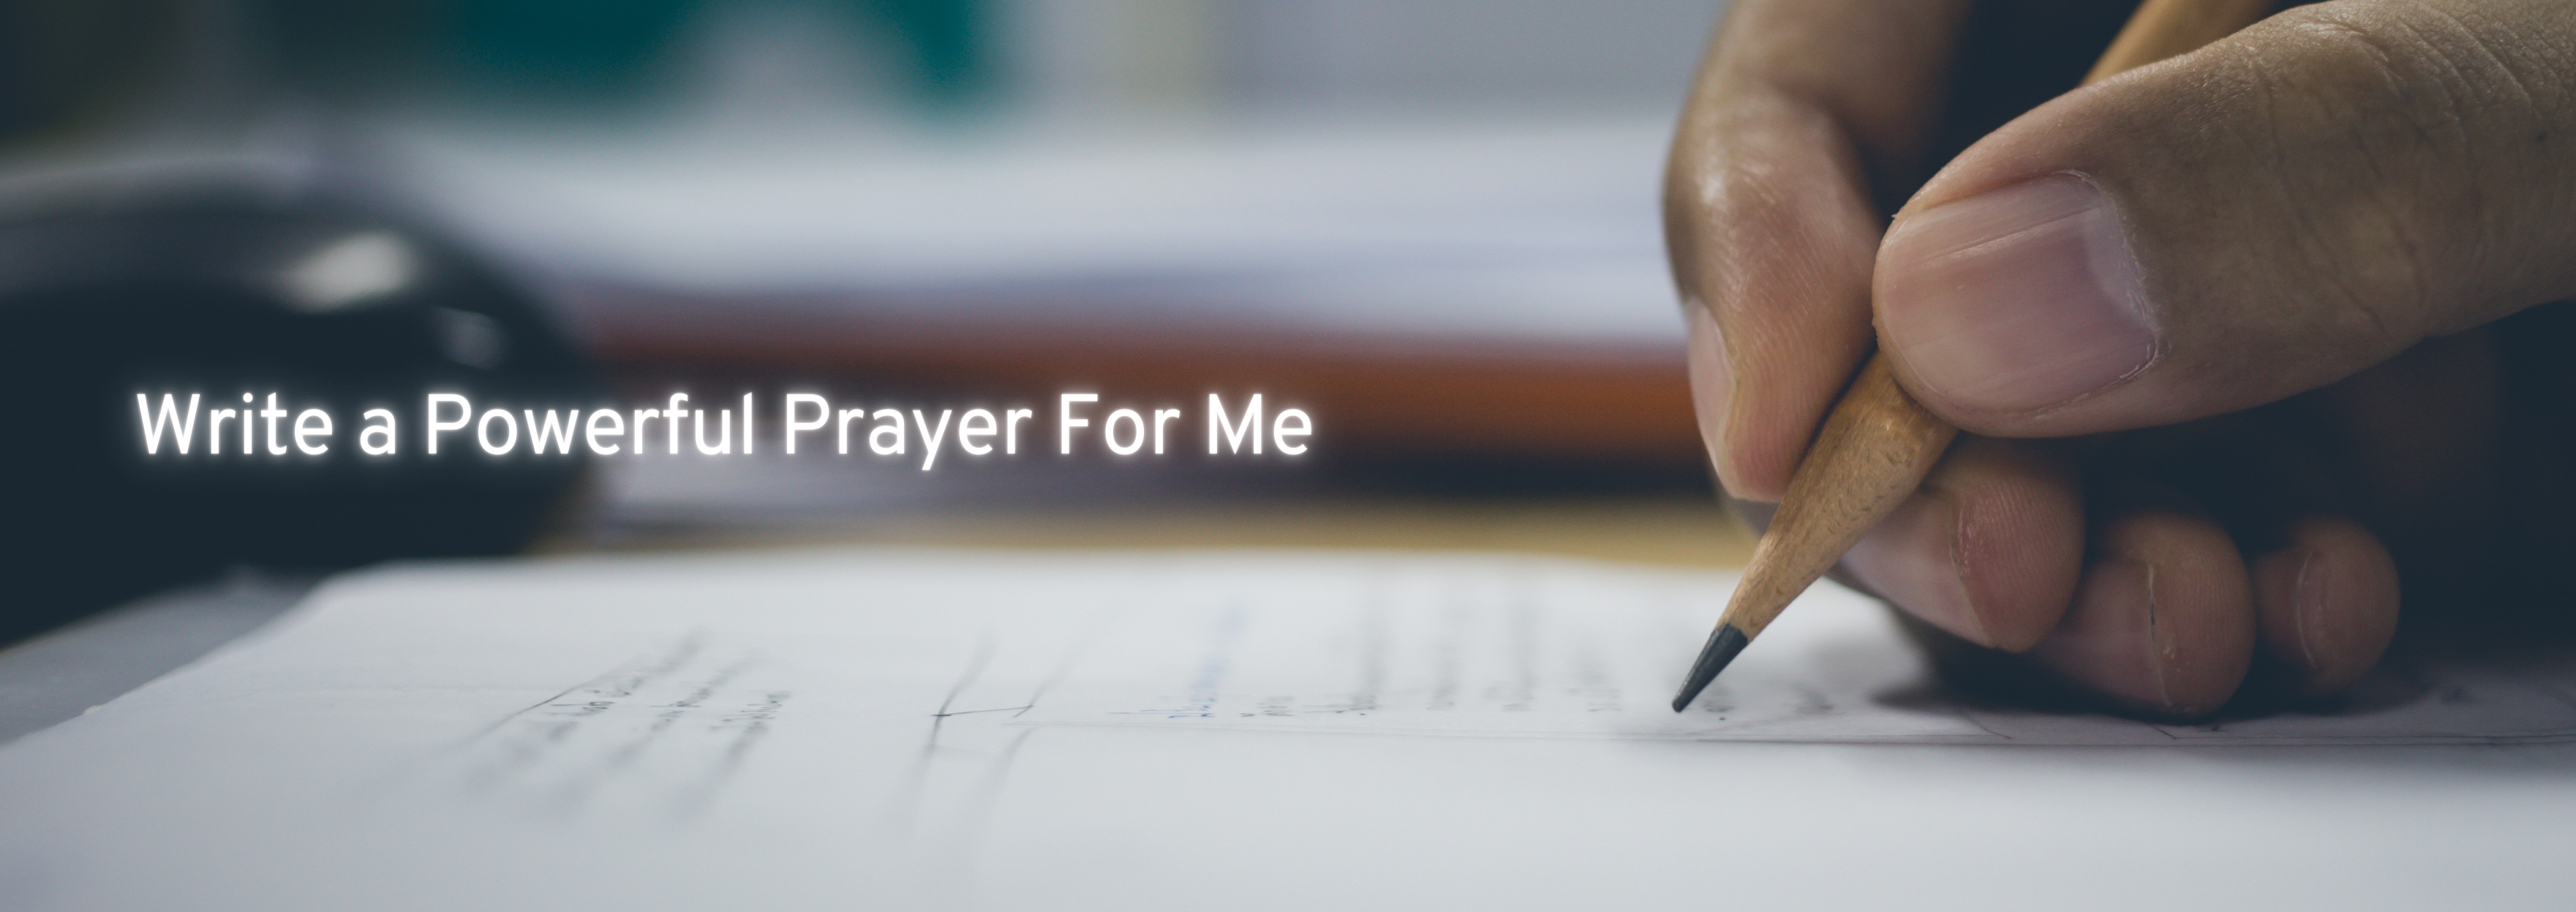 Powerful Prayer